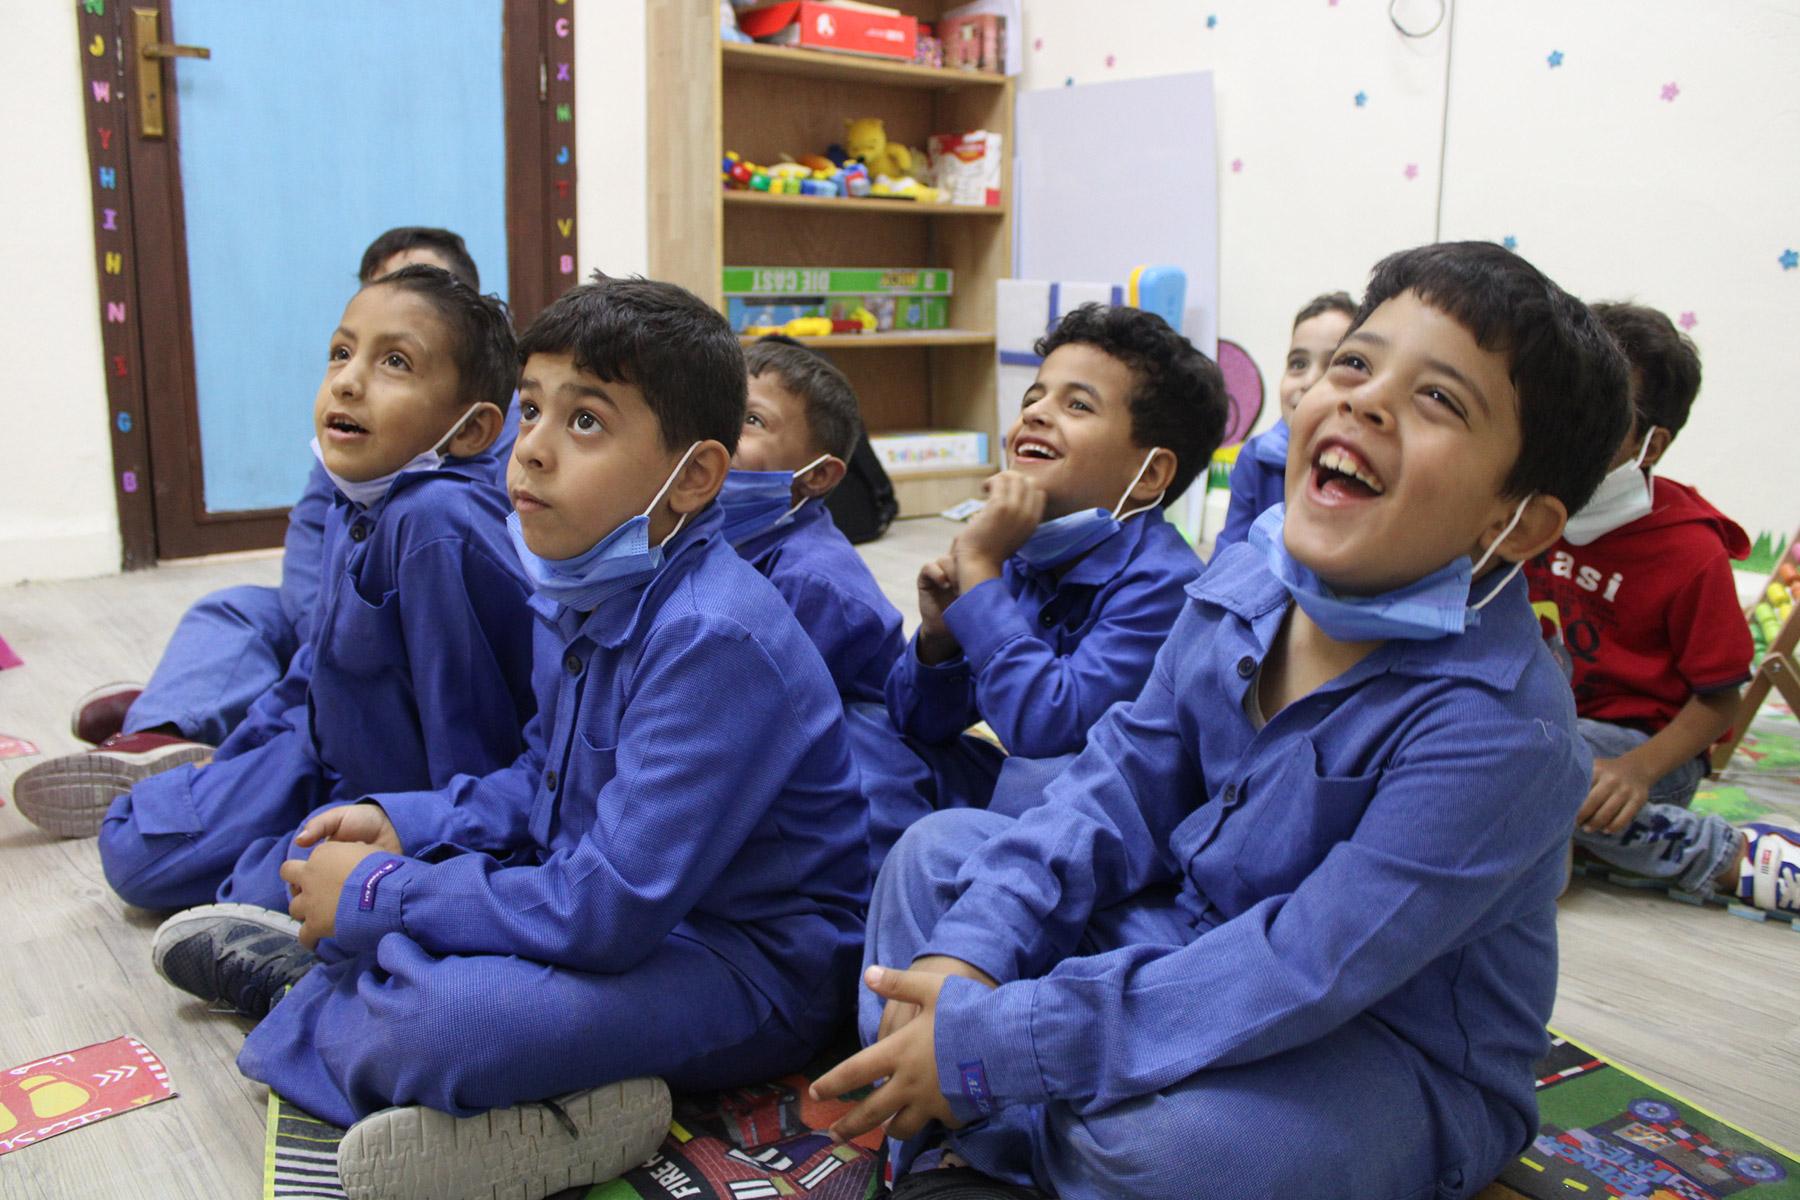 Students enjoy the multi-purpose-room at Othman Bin Affan Primary School for Boys in Zarqa. Photos: LWF/ A. Alsamra